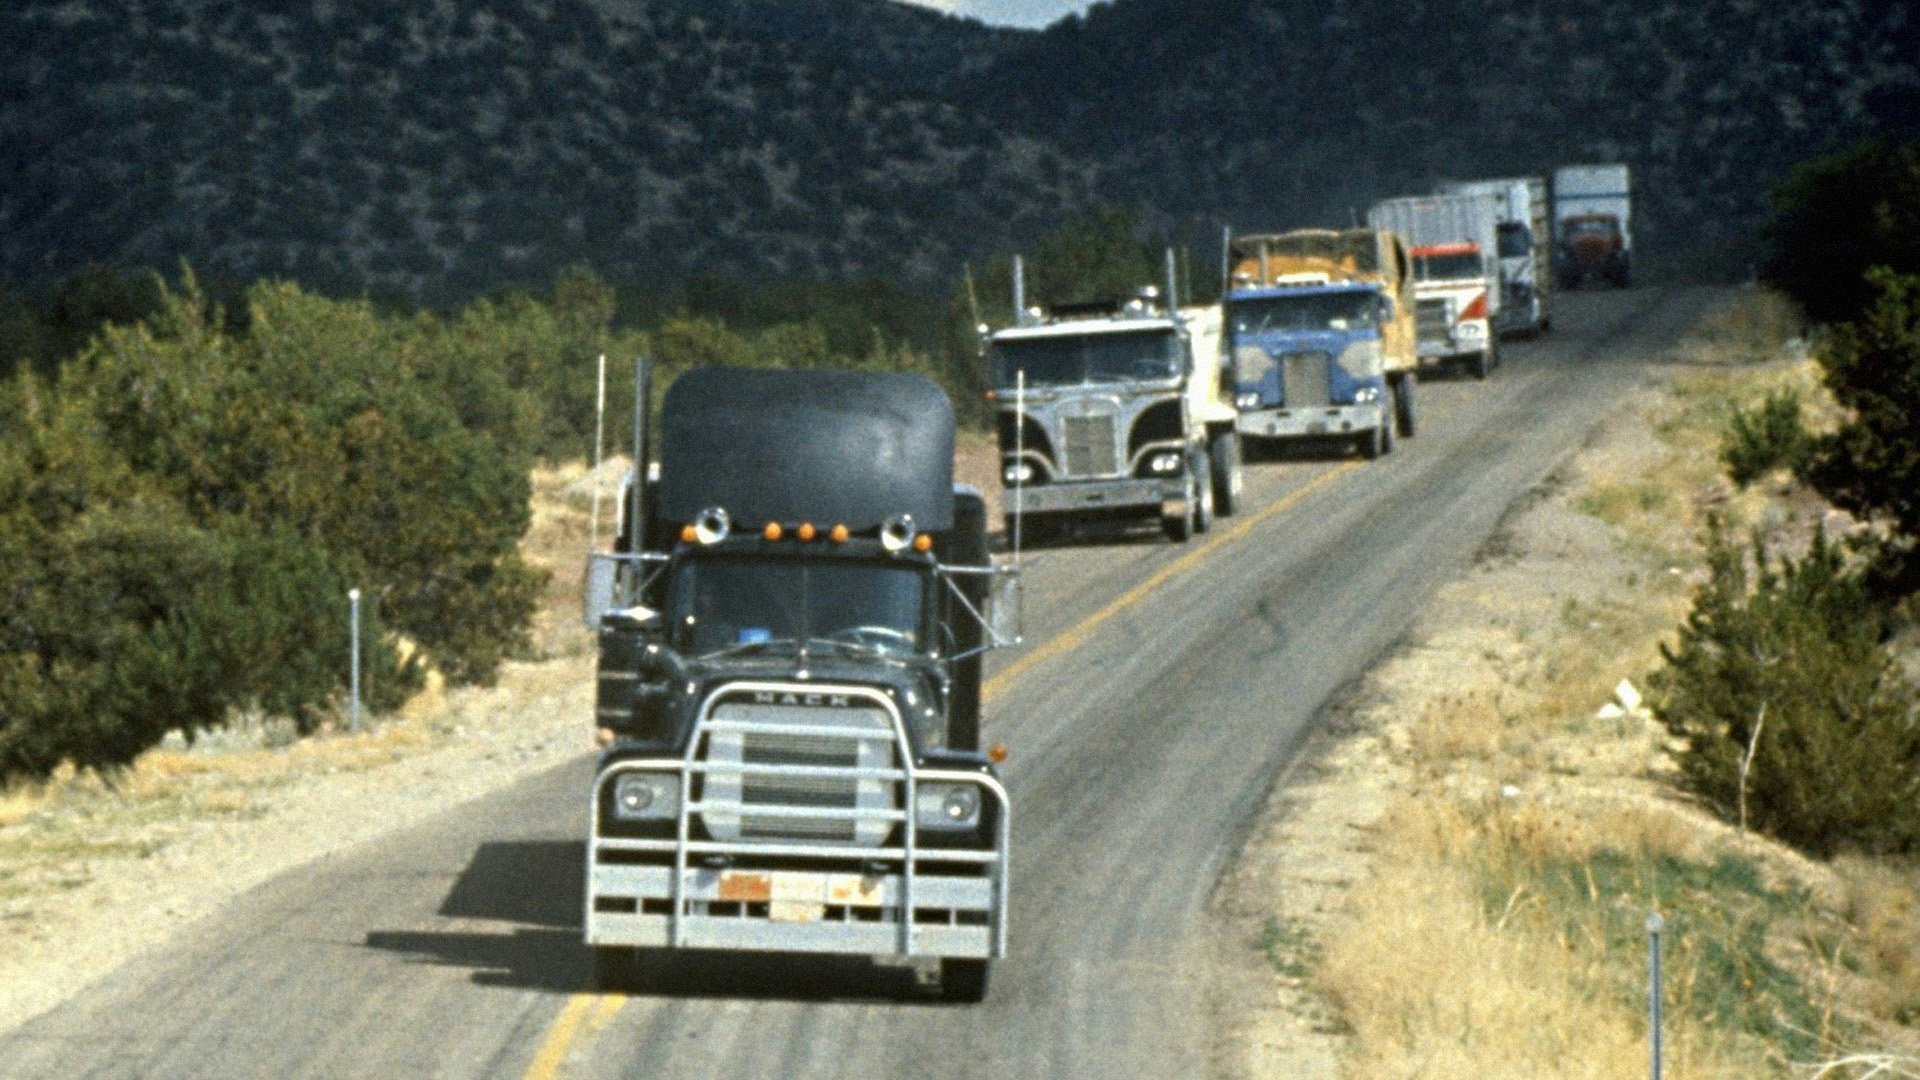 convoy movie truck